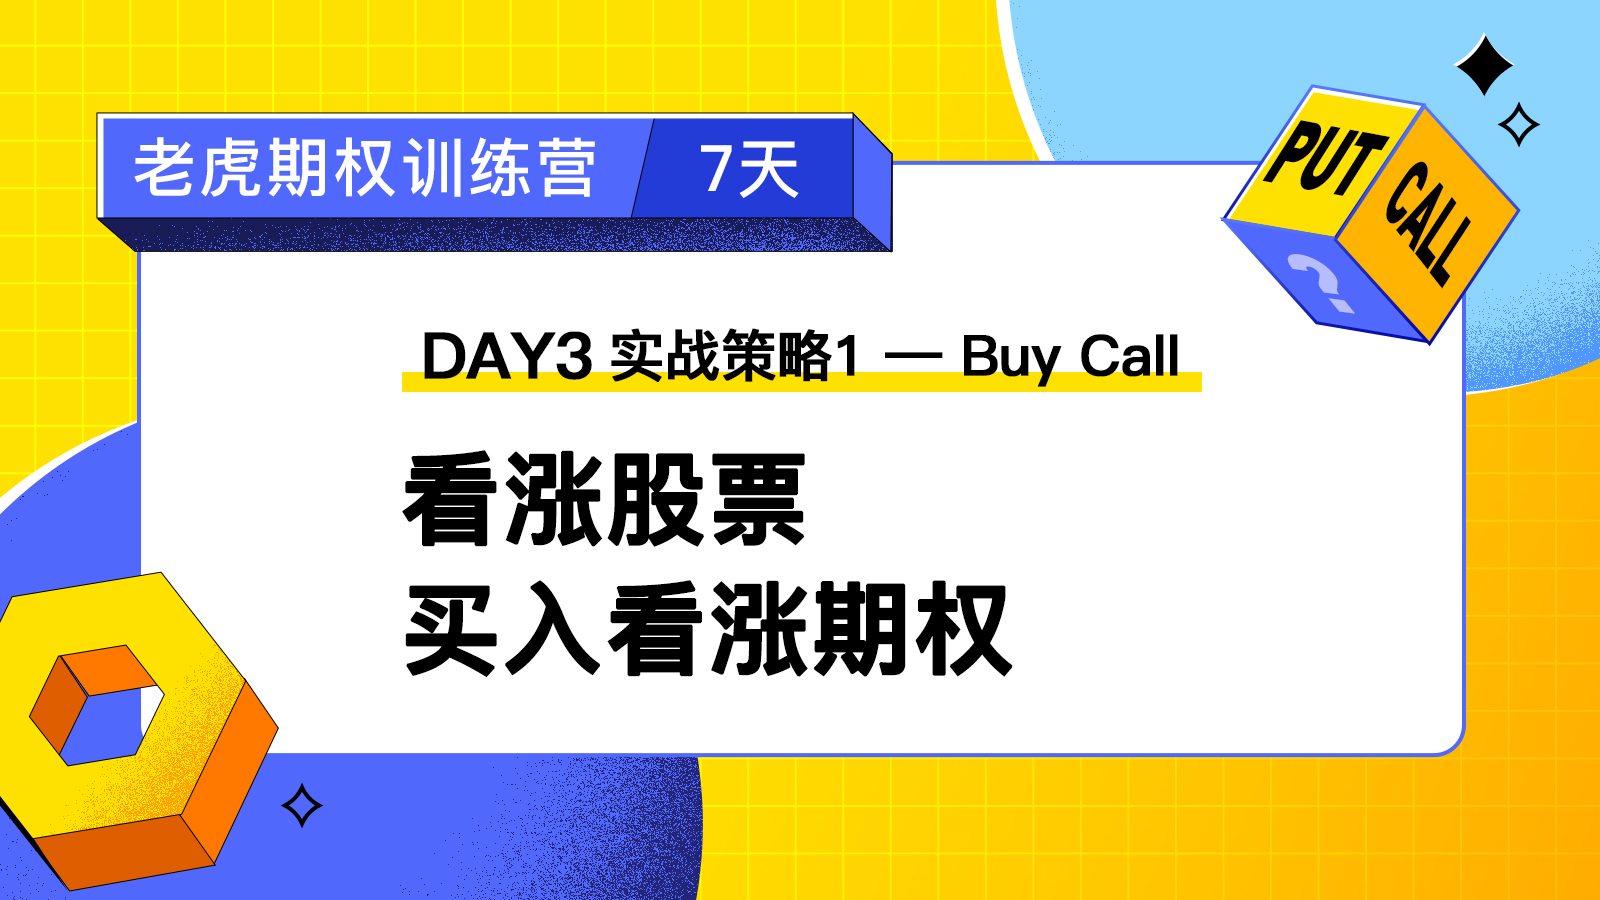 DAY3: 实战策略1: 看涨股票，买入看涨期权（Buy Call）